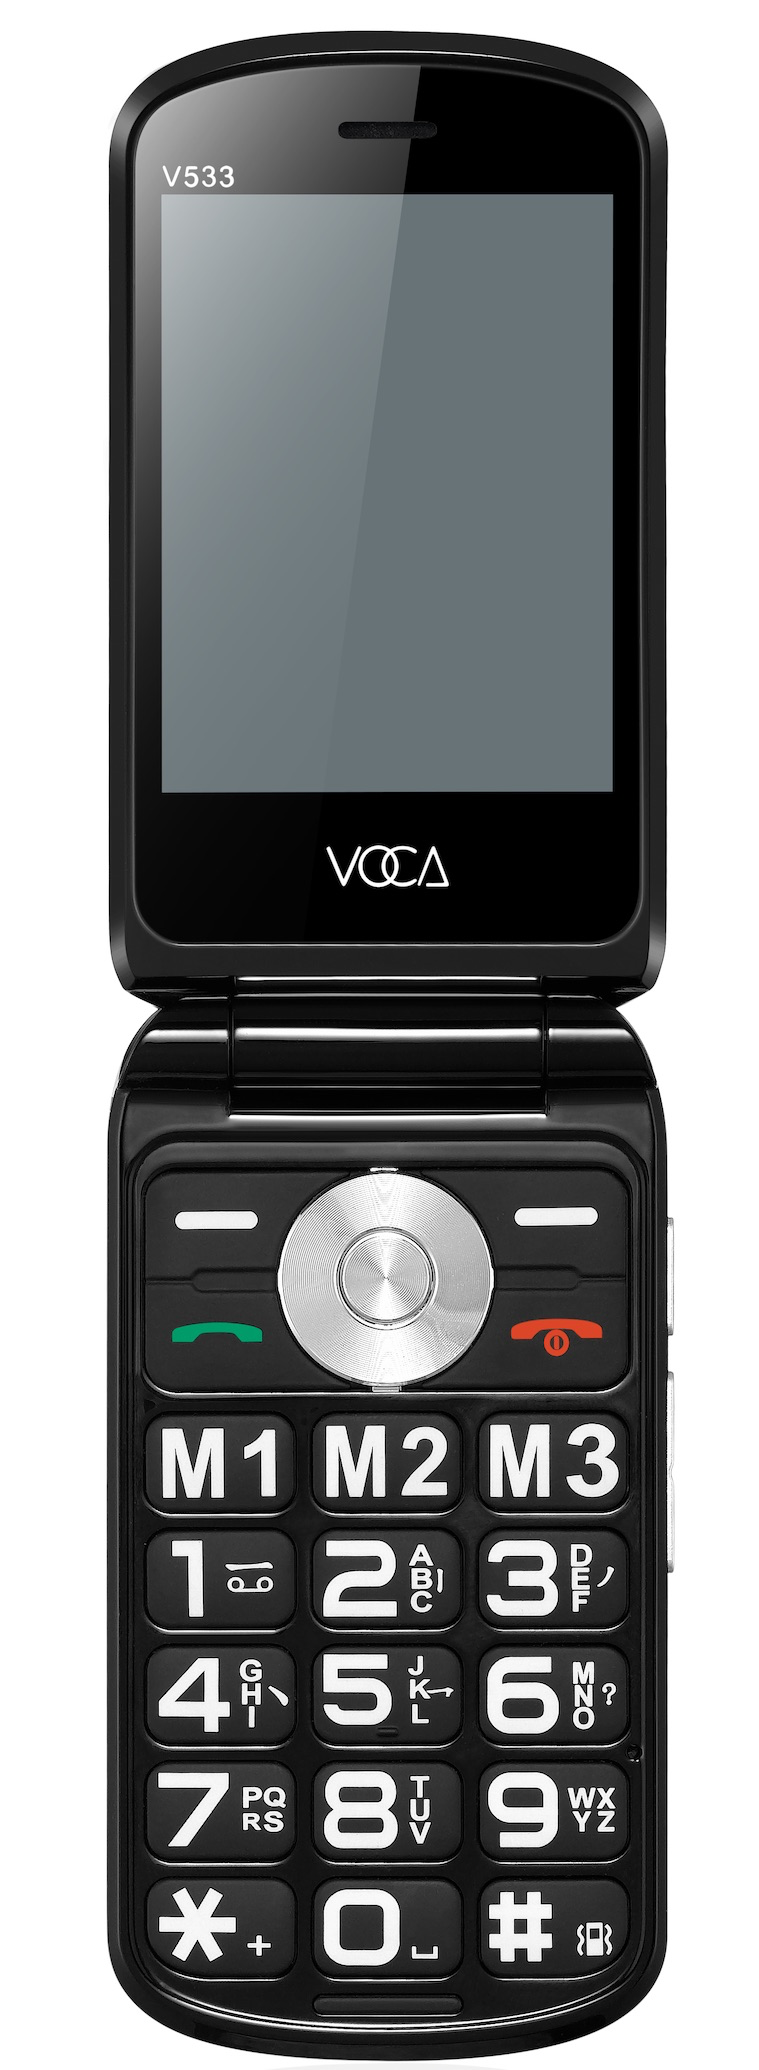 VOCA V330 Charging Cradle 